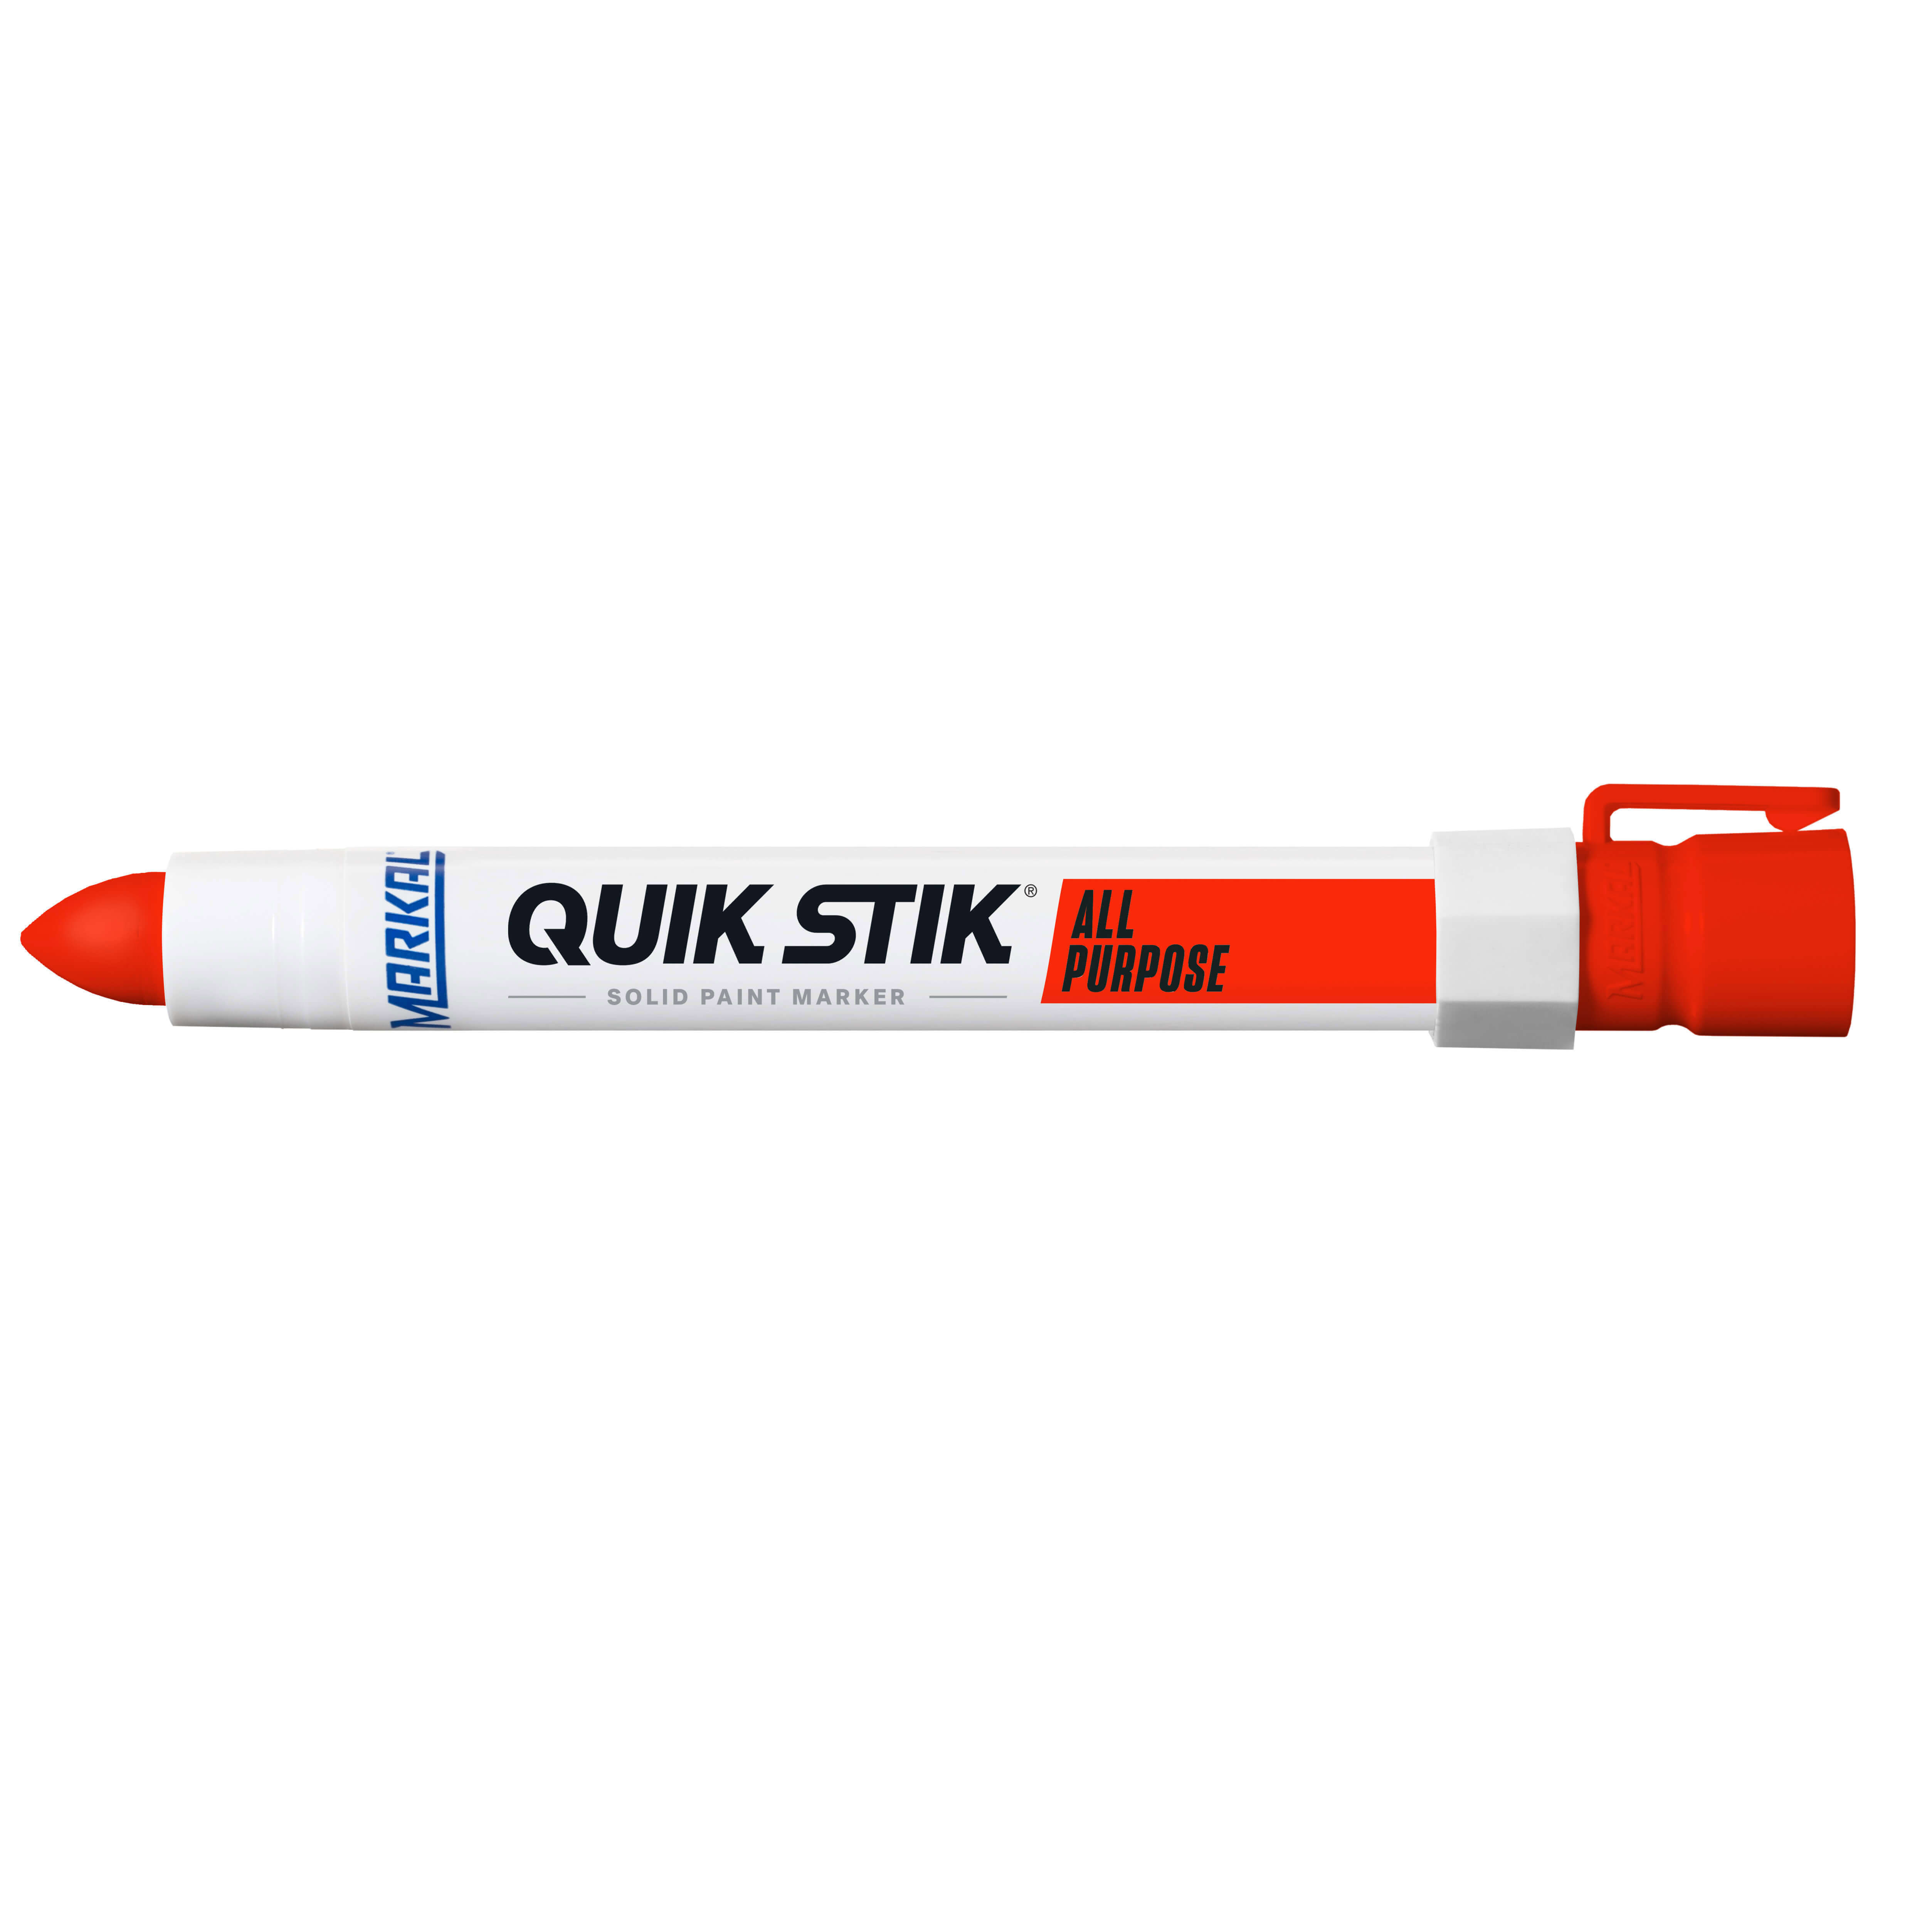 Quik Stik All Purpose – paint marker, red